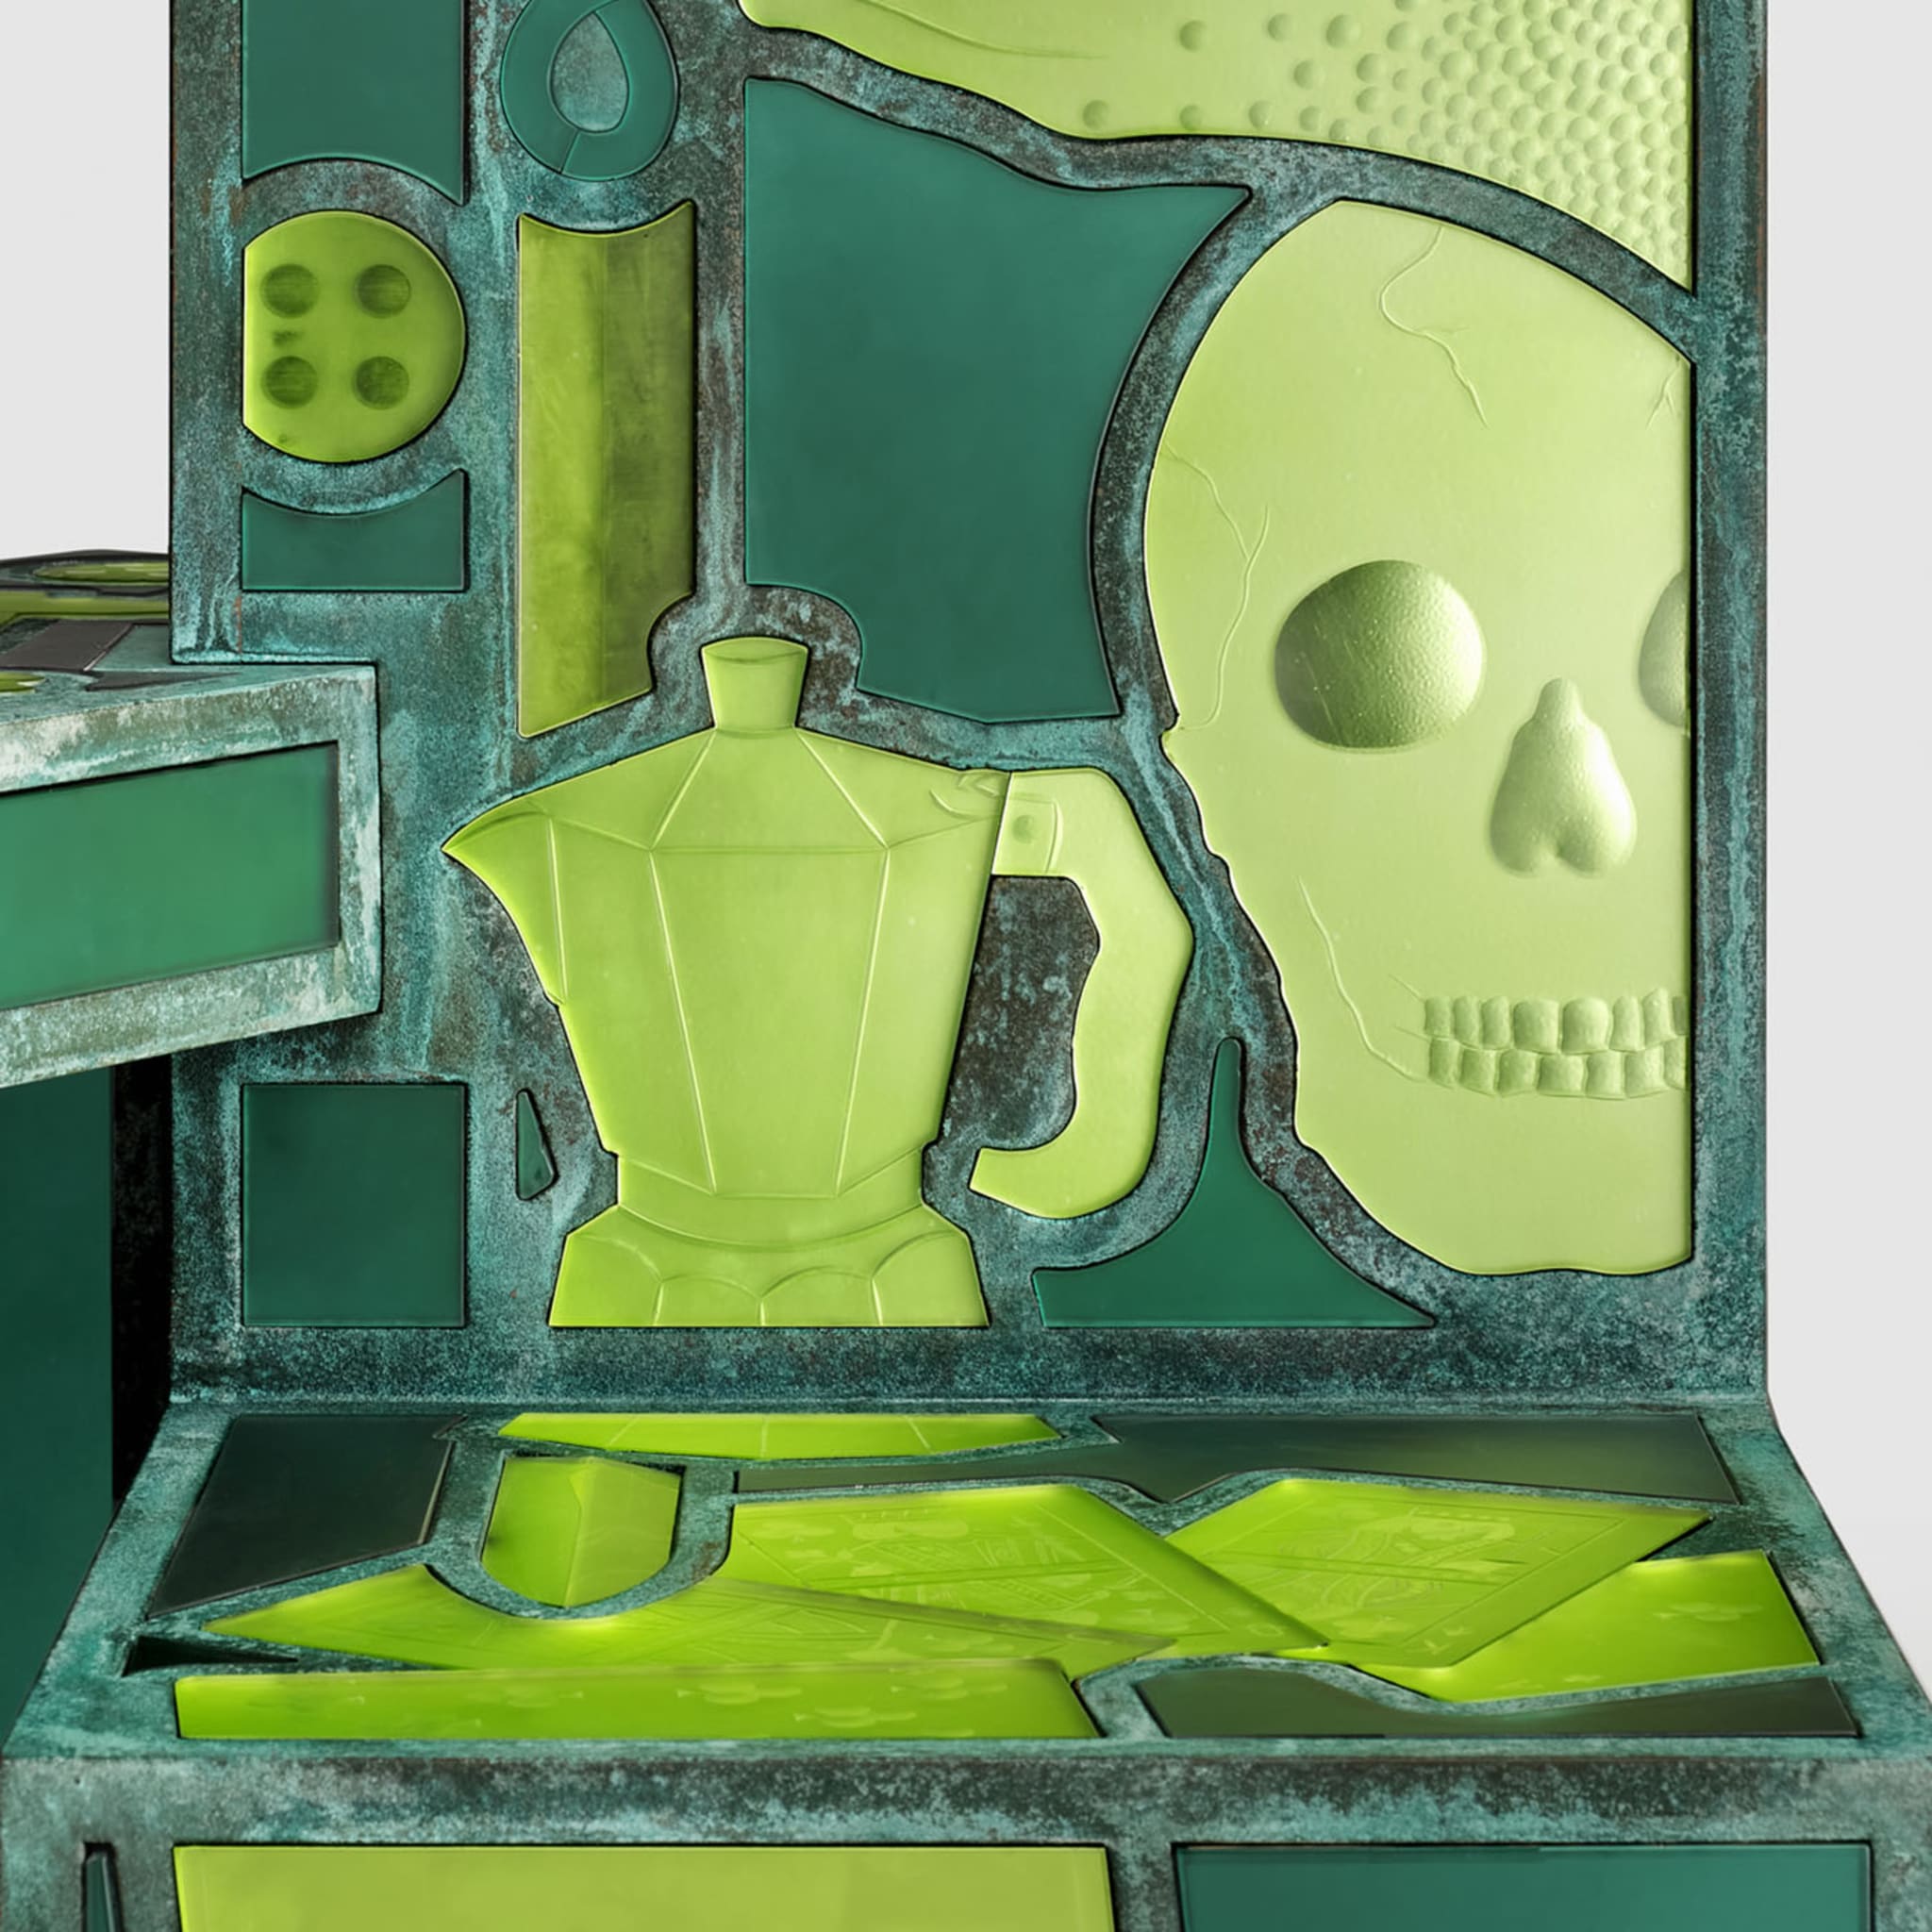 Past Green Chair By Leo De Carlo - Alternative view 2